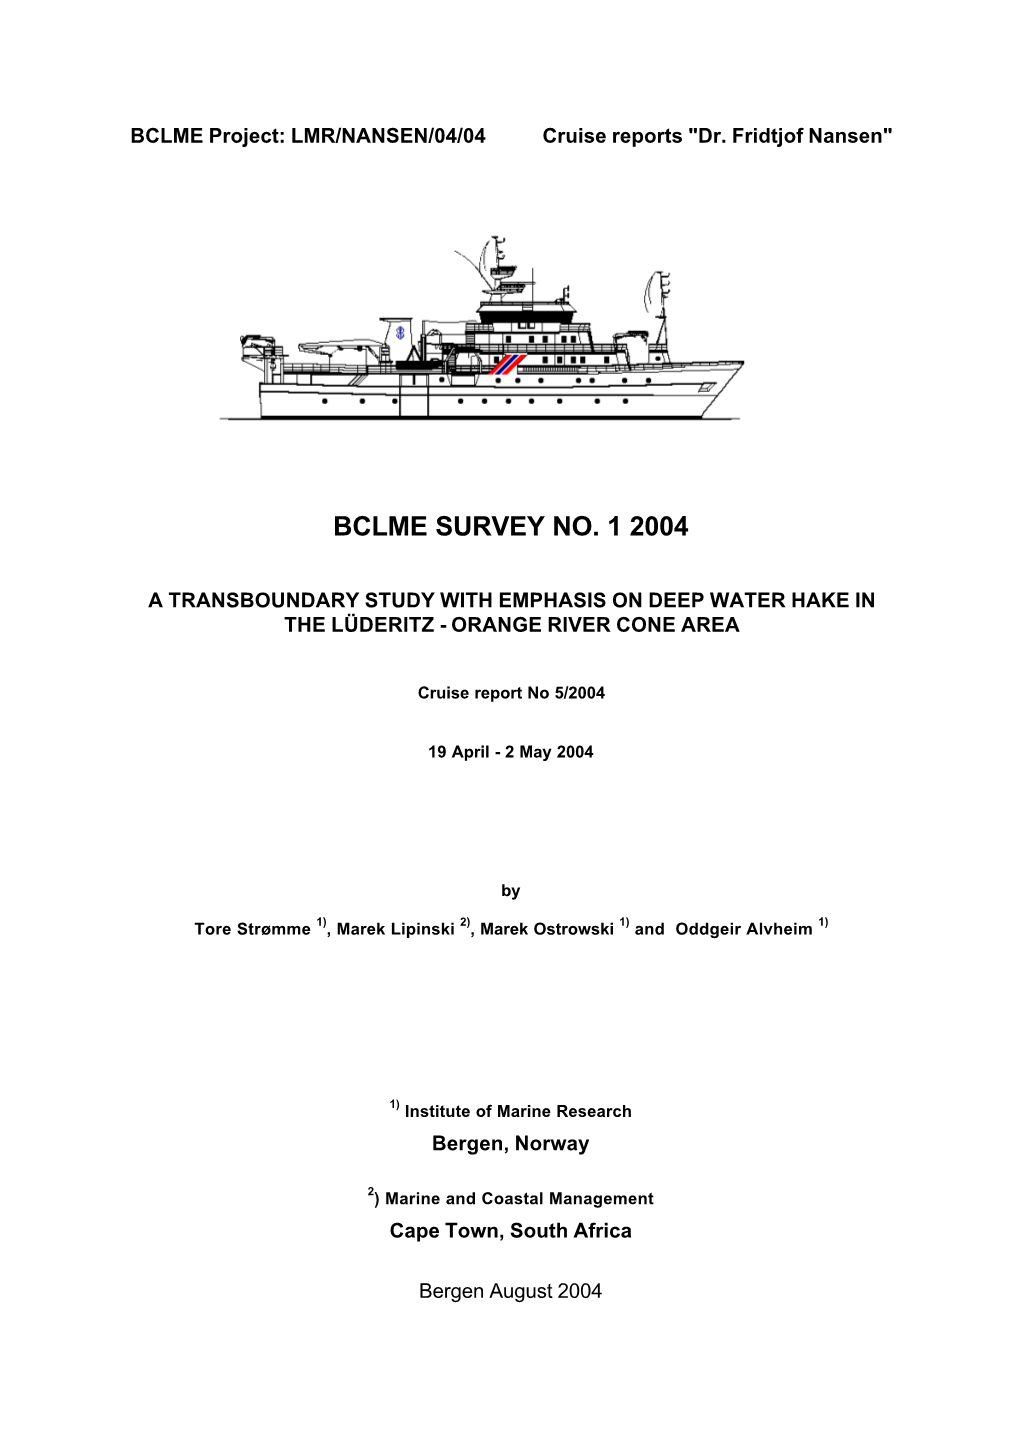 Bclme Survey No. 1 2004